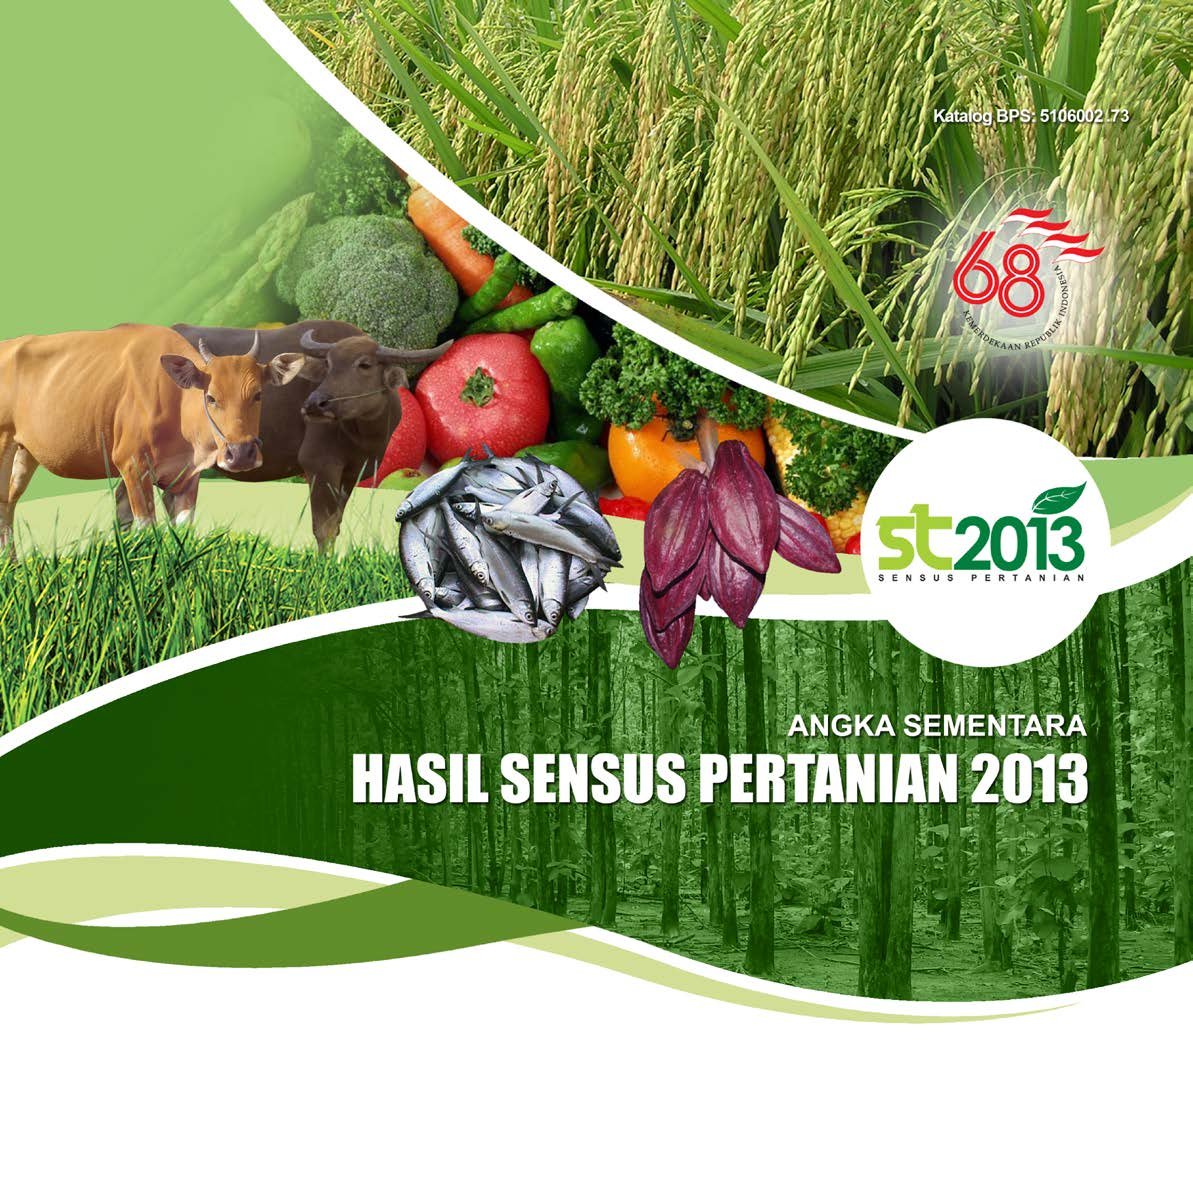 Jumlah rumah tangga usaha pertanian di Sulawesi Selatan Tahun 2013 sebanyak